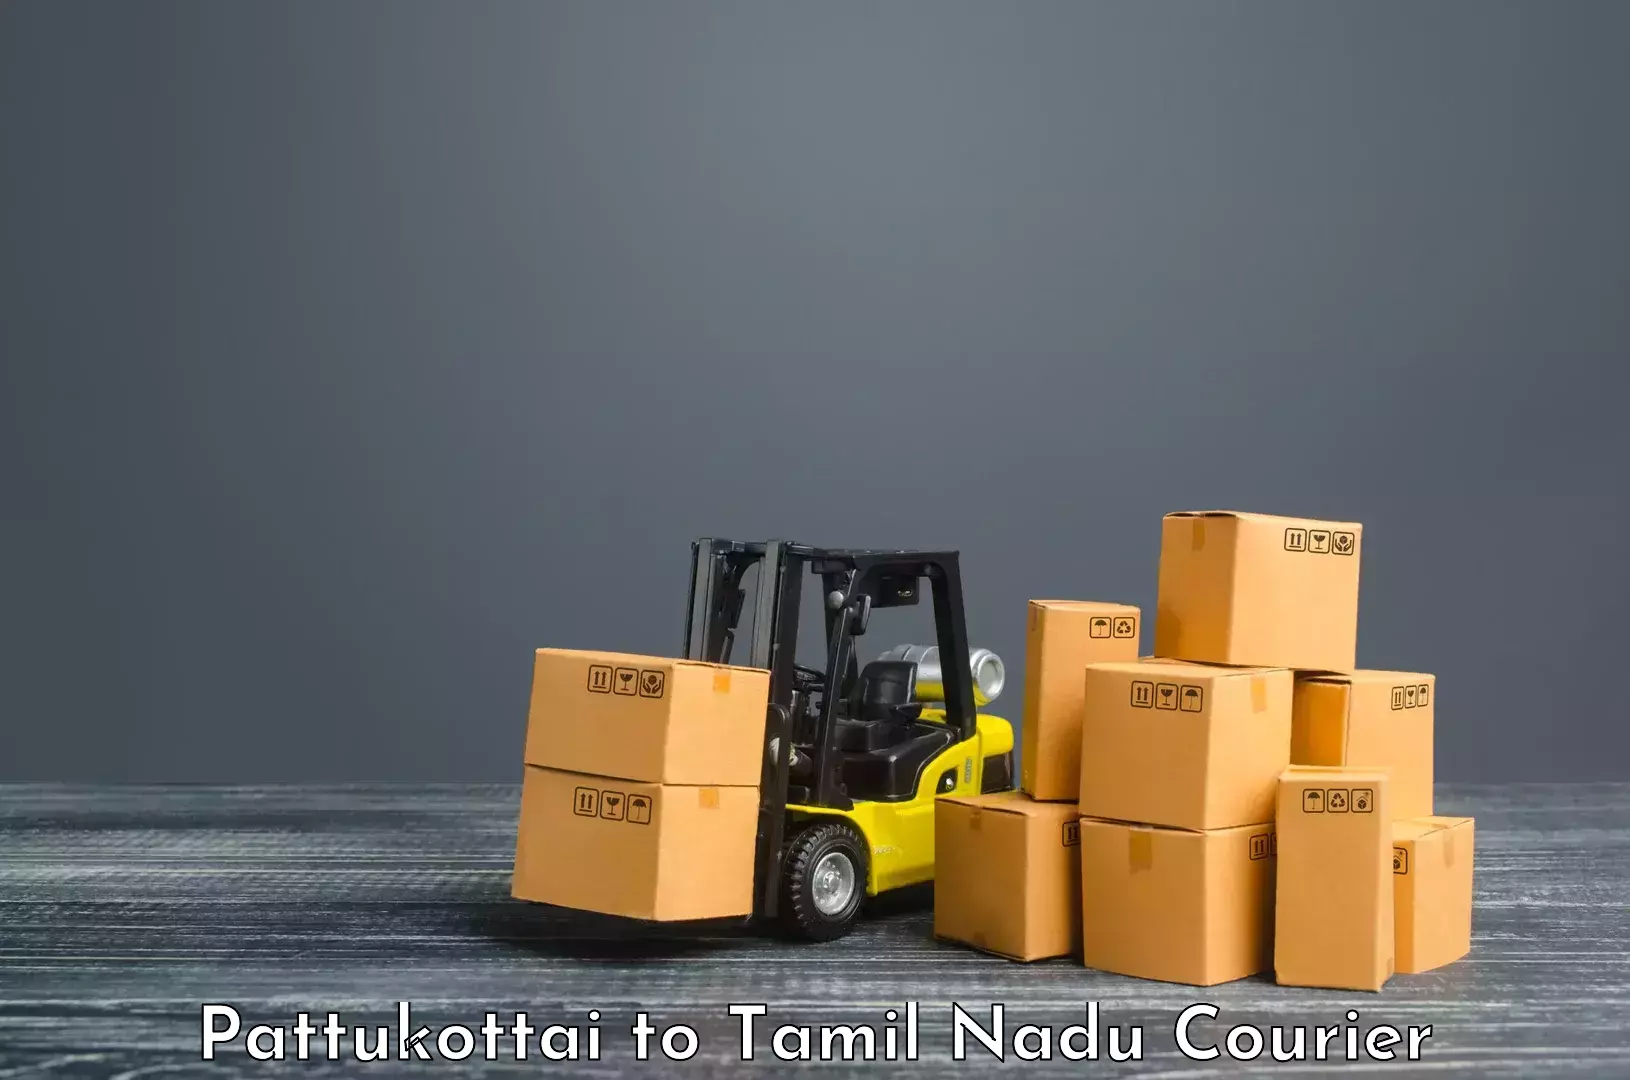 Reliable courier service Pattukottai to Kunnathur